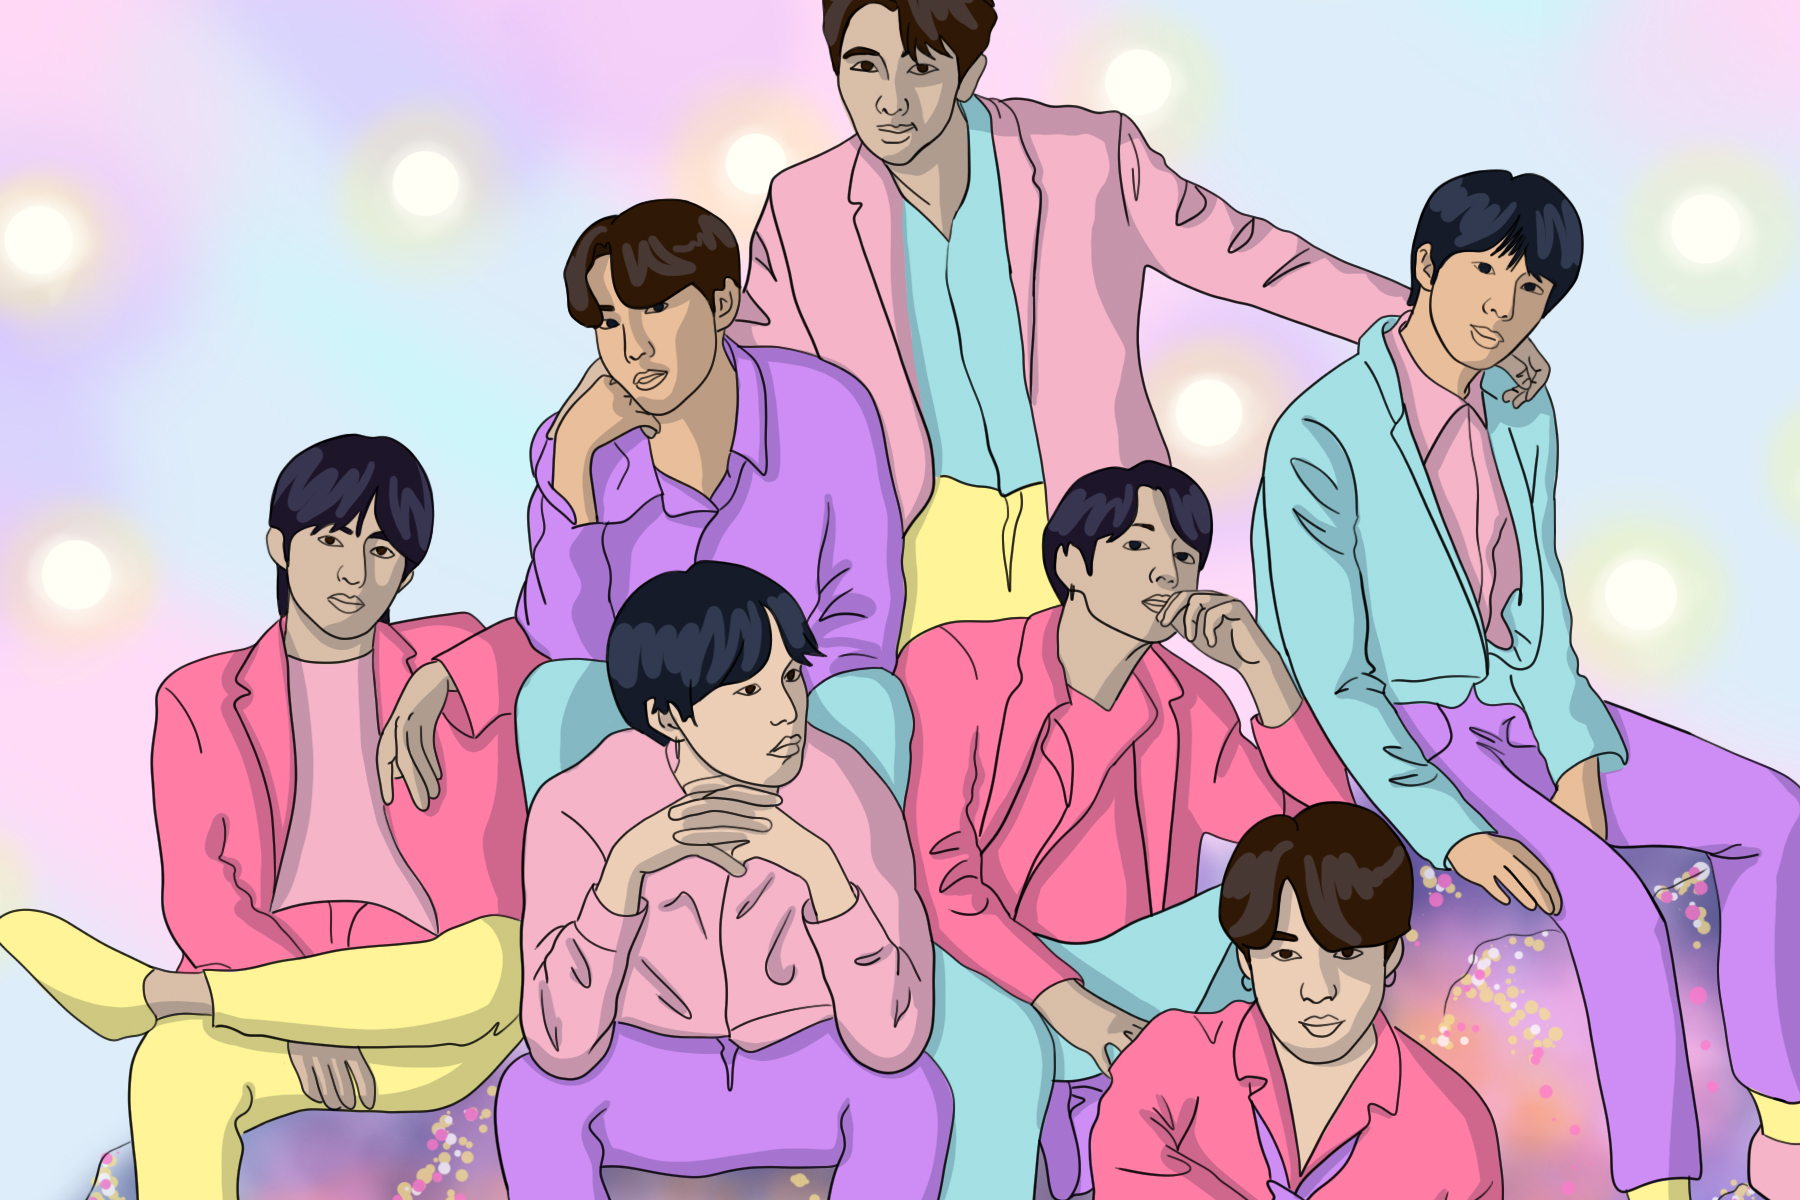 An illustration of famous K-pop group, BTS